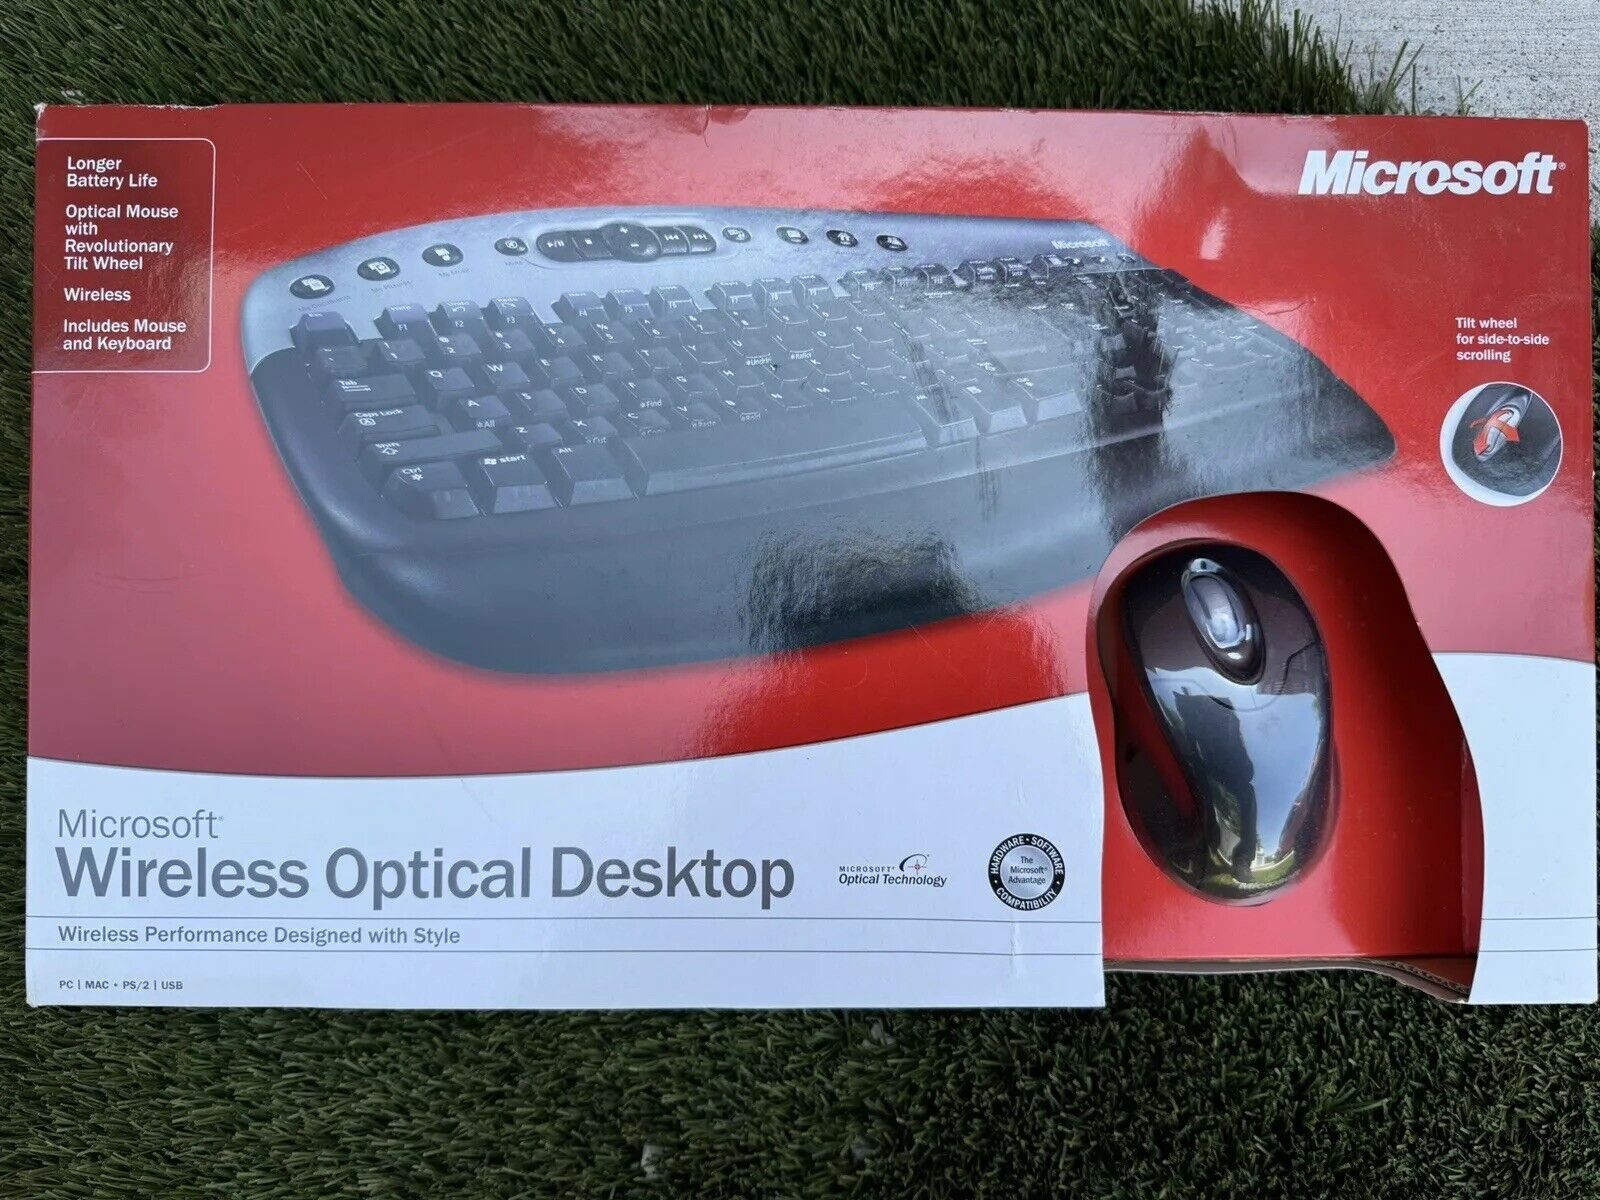 Microsoft Wireless Optical PC/MACDesktop Keyboard and Mouse 1006/1008/1019